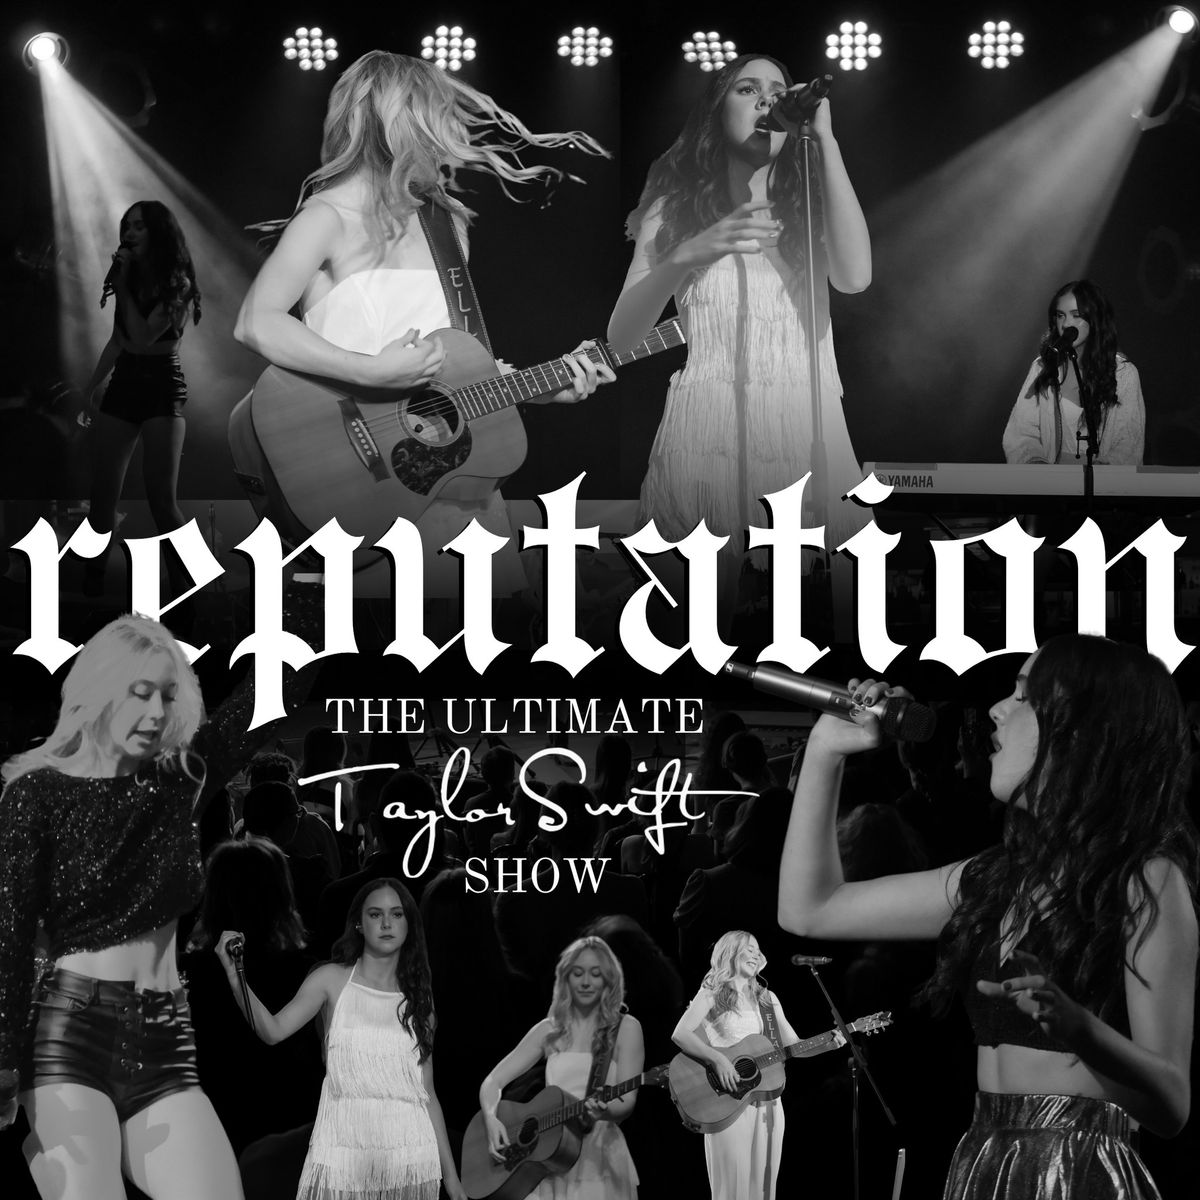 REPUTATION: The Ultimate Taylor Swift Show |  PERTH, WA